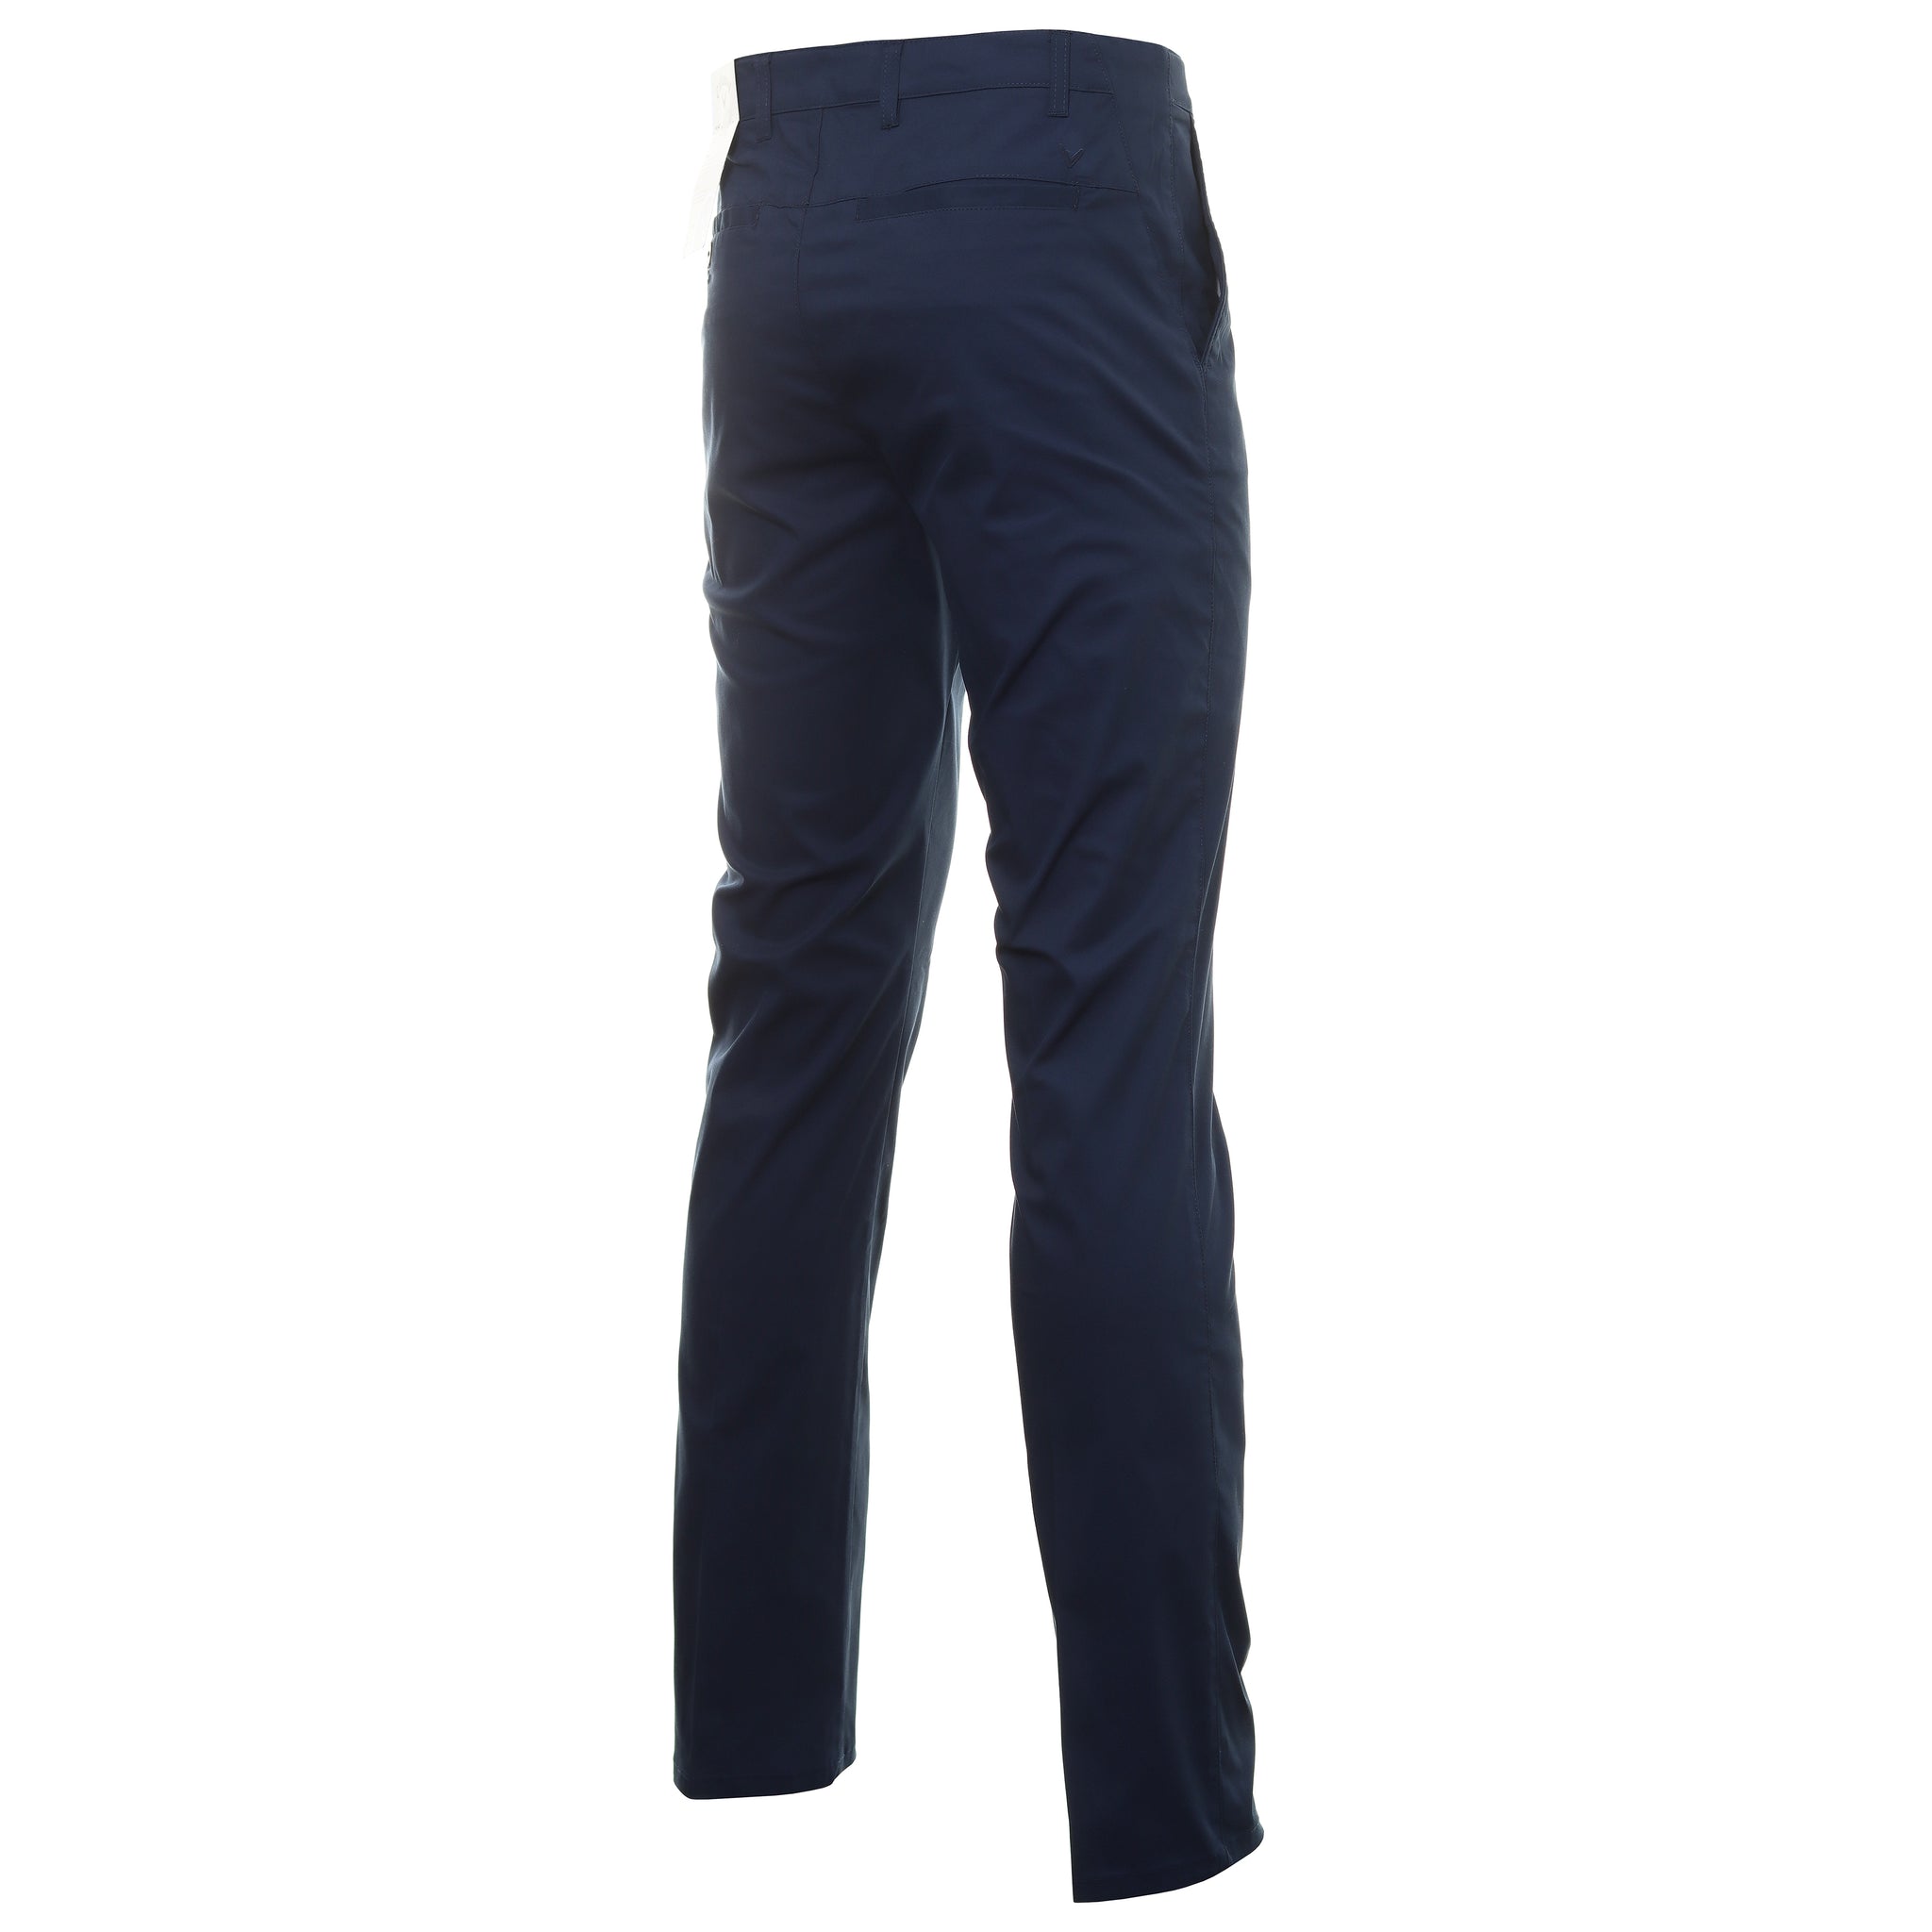 callaway-golf-x-series-flat-front-trousers-cgbsc054-navy-blazer-972